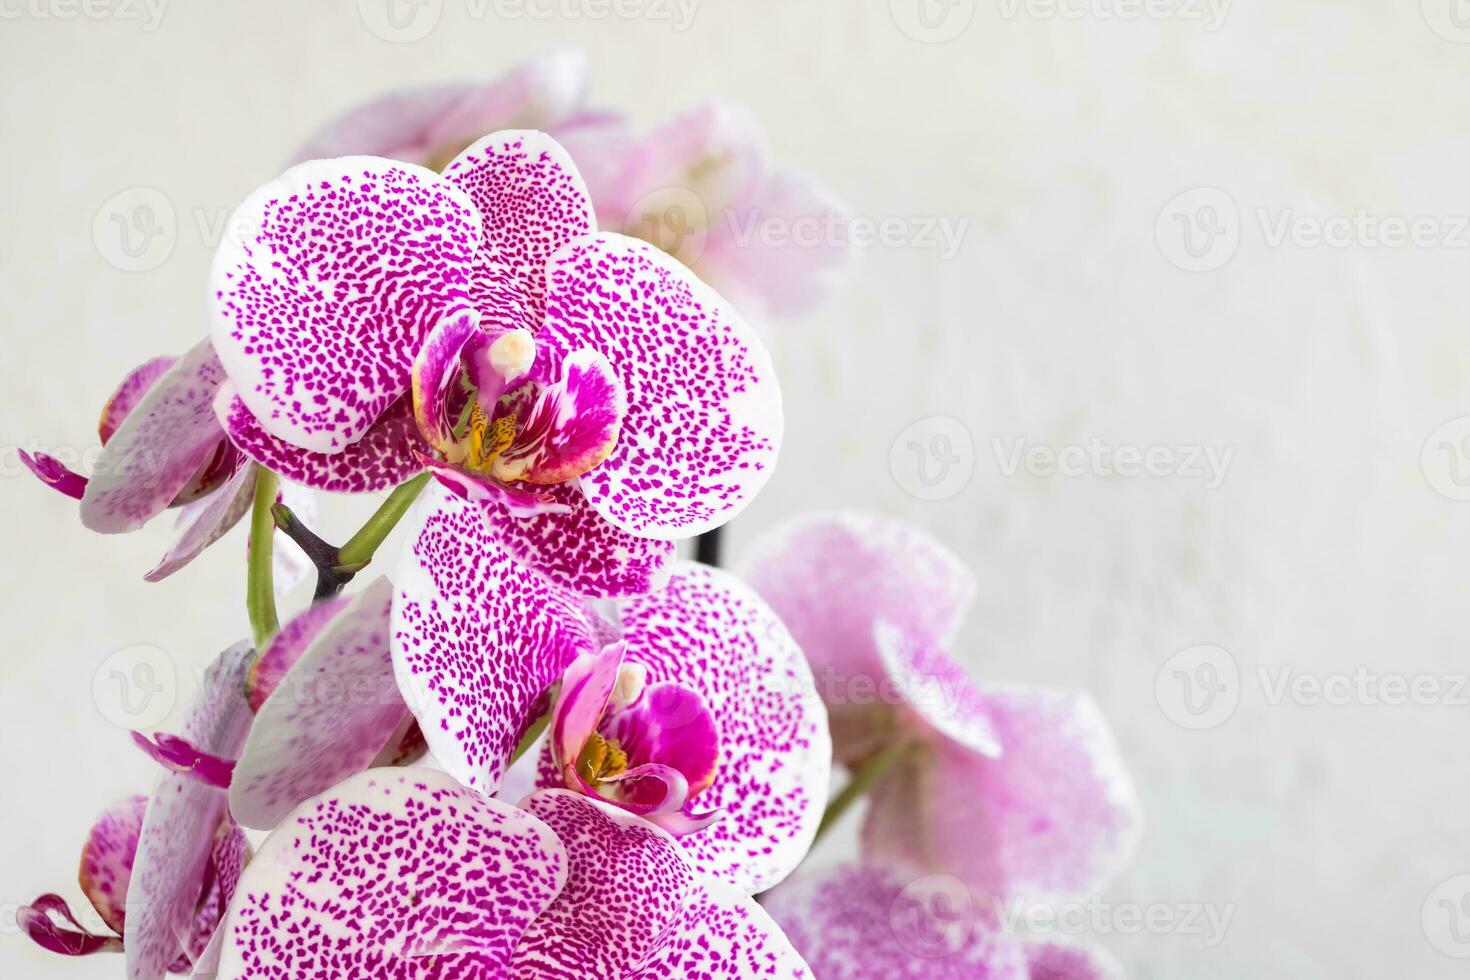 tropisch Afdeling wit met klein Purper spikkels orchidee bloemen phalaenopsis foto